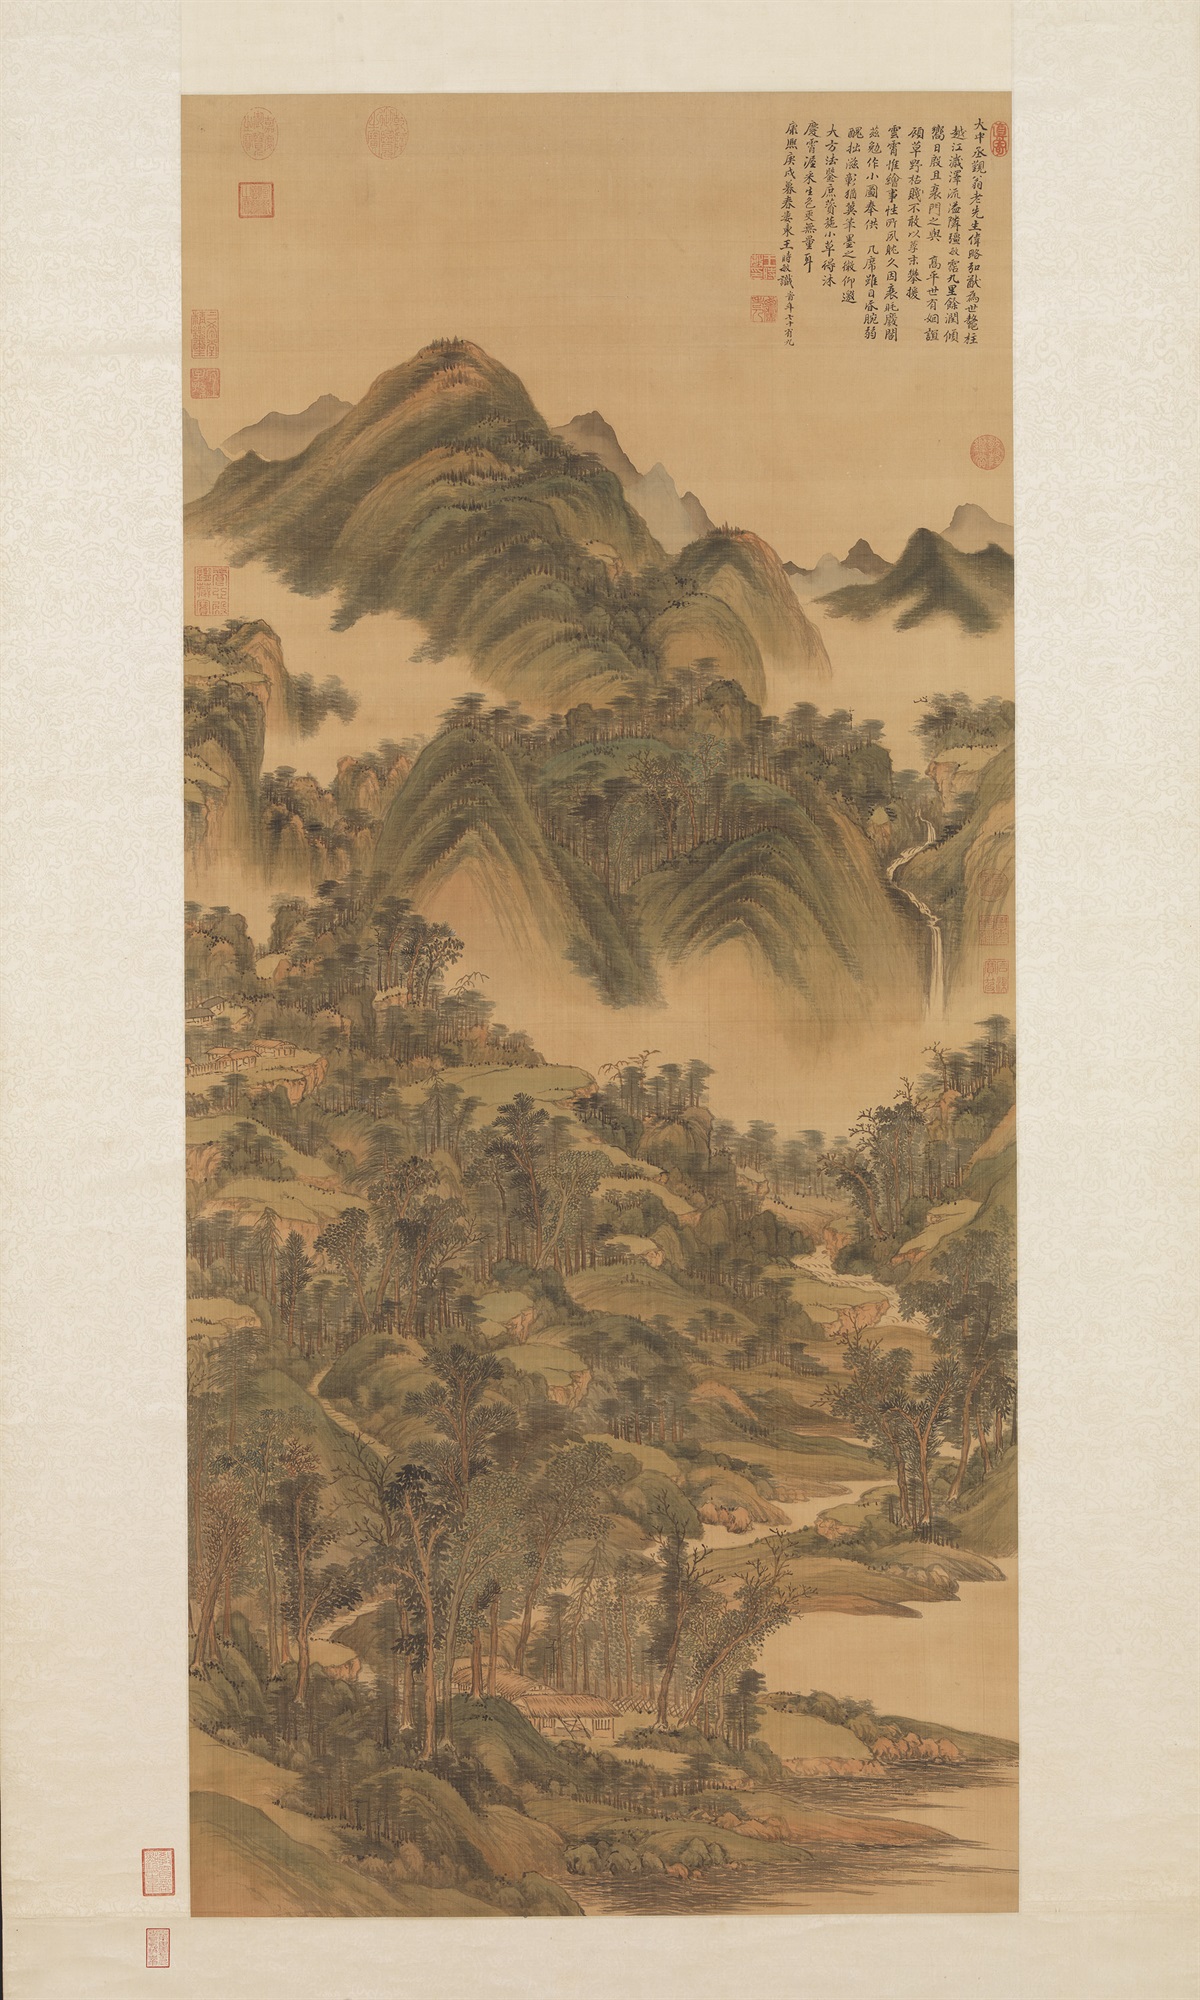 "Landscape in the Style of Huang Gongwang Wang Shimin (1592-1680), Qing dynasty"